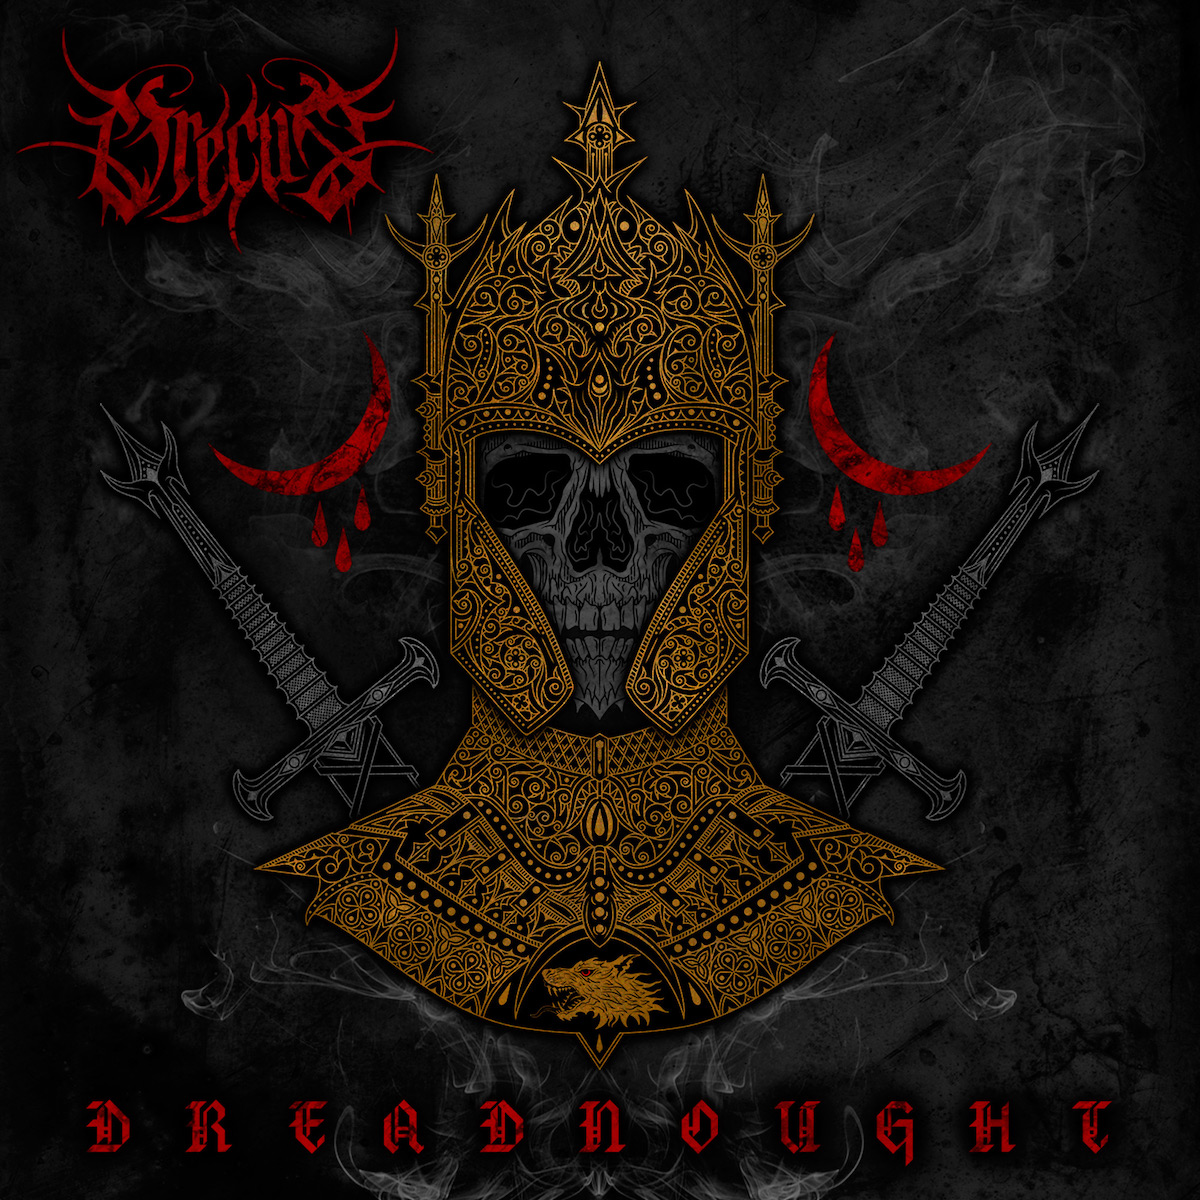 ALBUM REVIEW: Dreadnought by Orecus